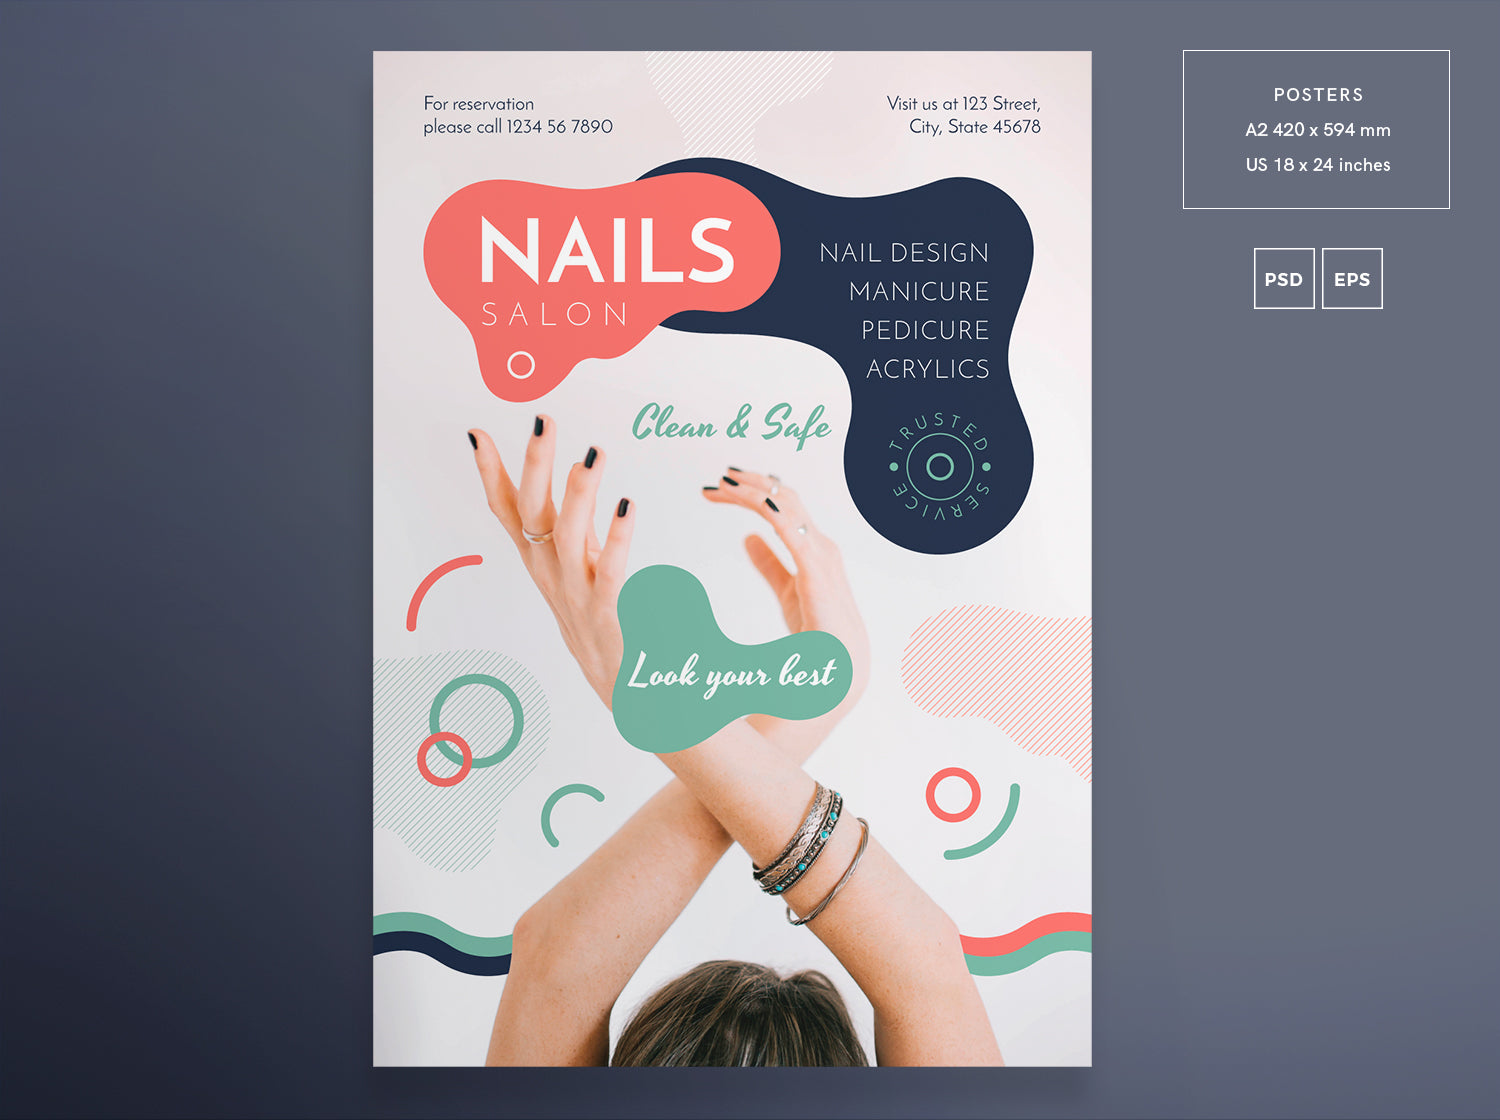 Nail Salon Special Offer Online Flyer Template - VistaCreate